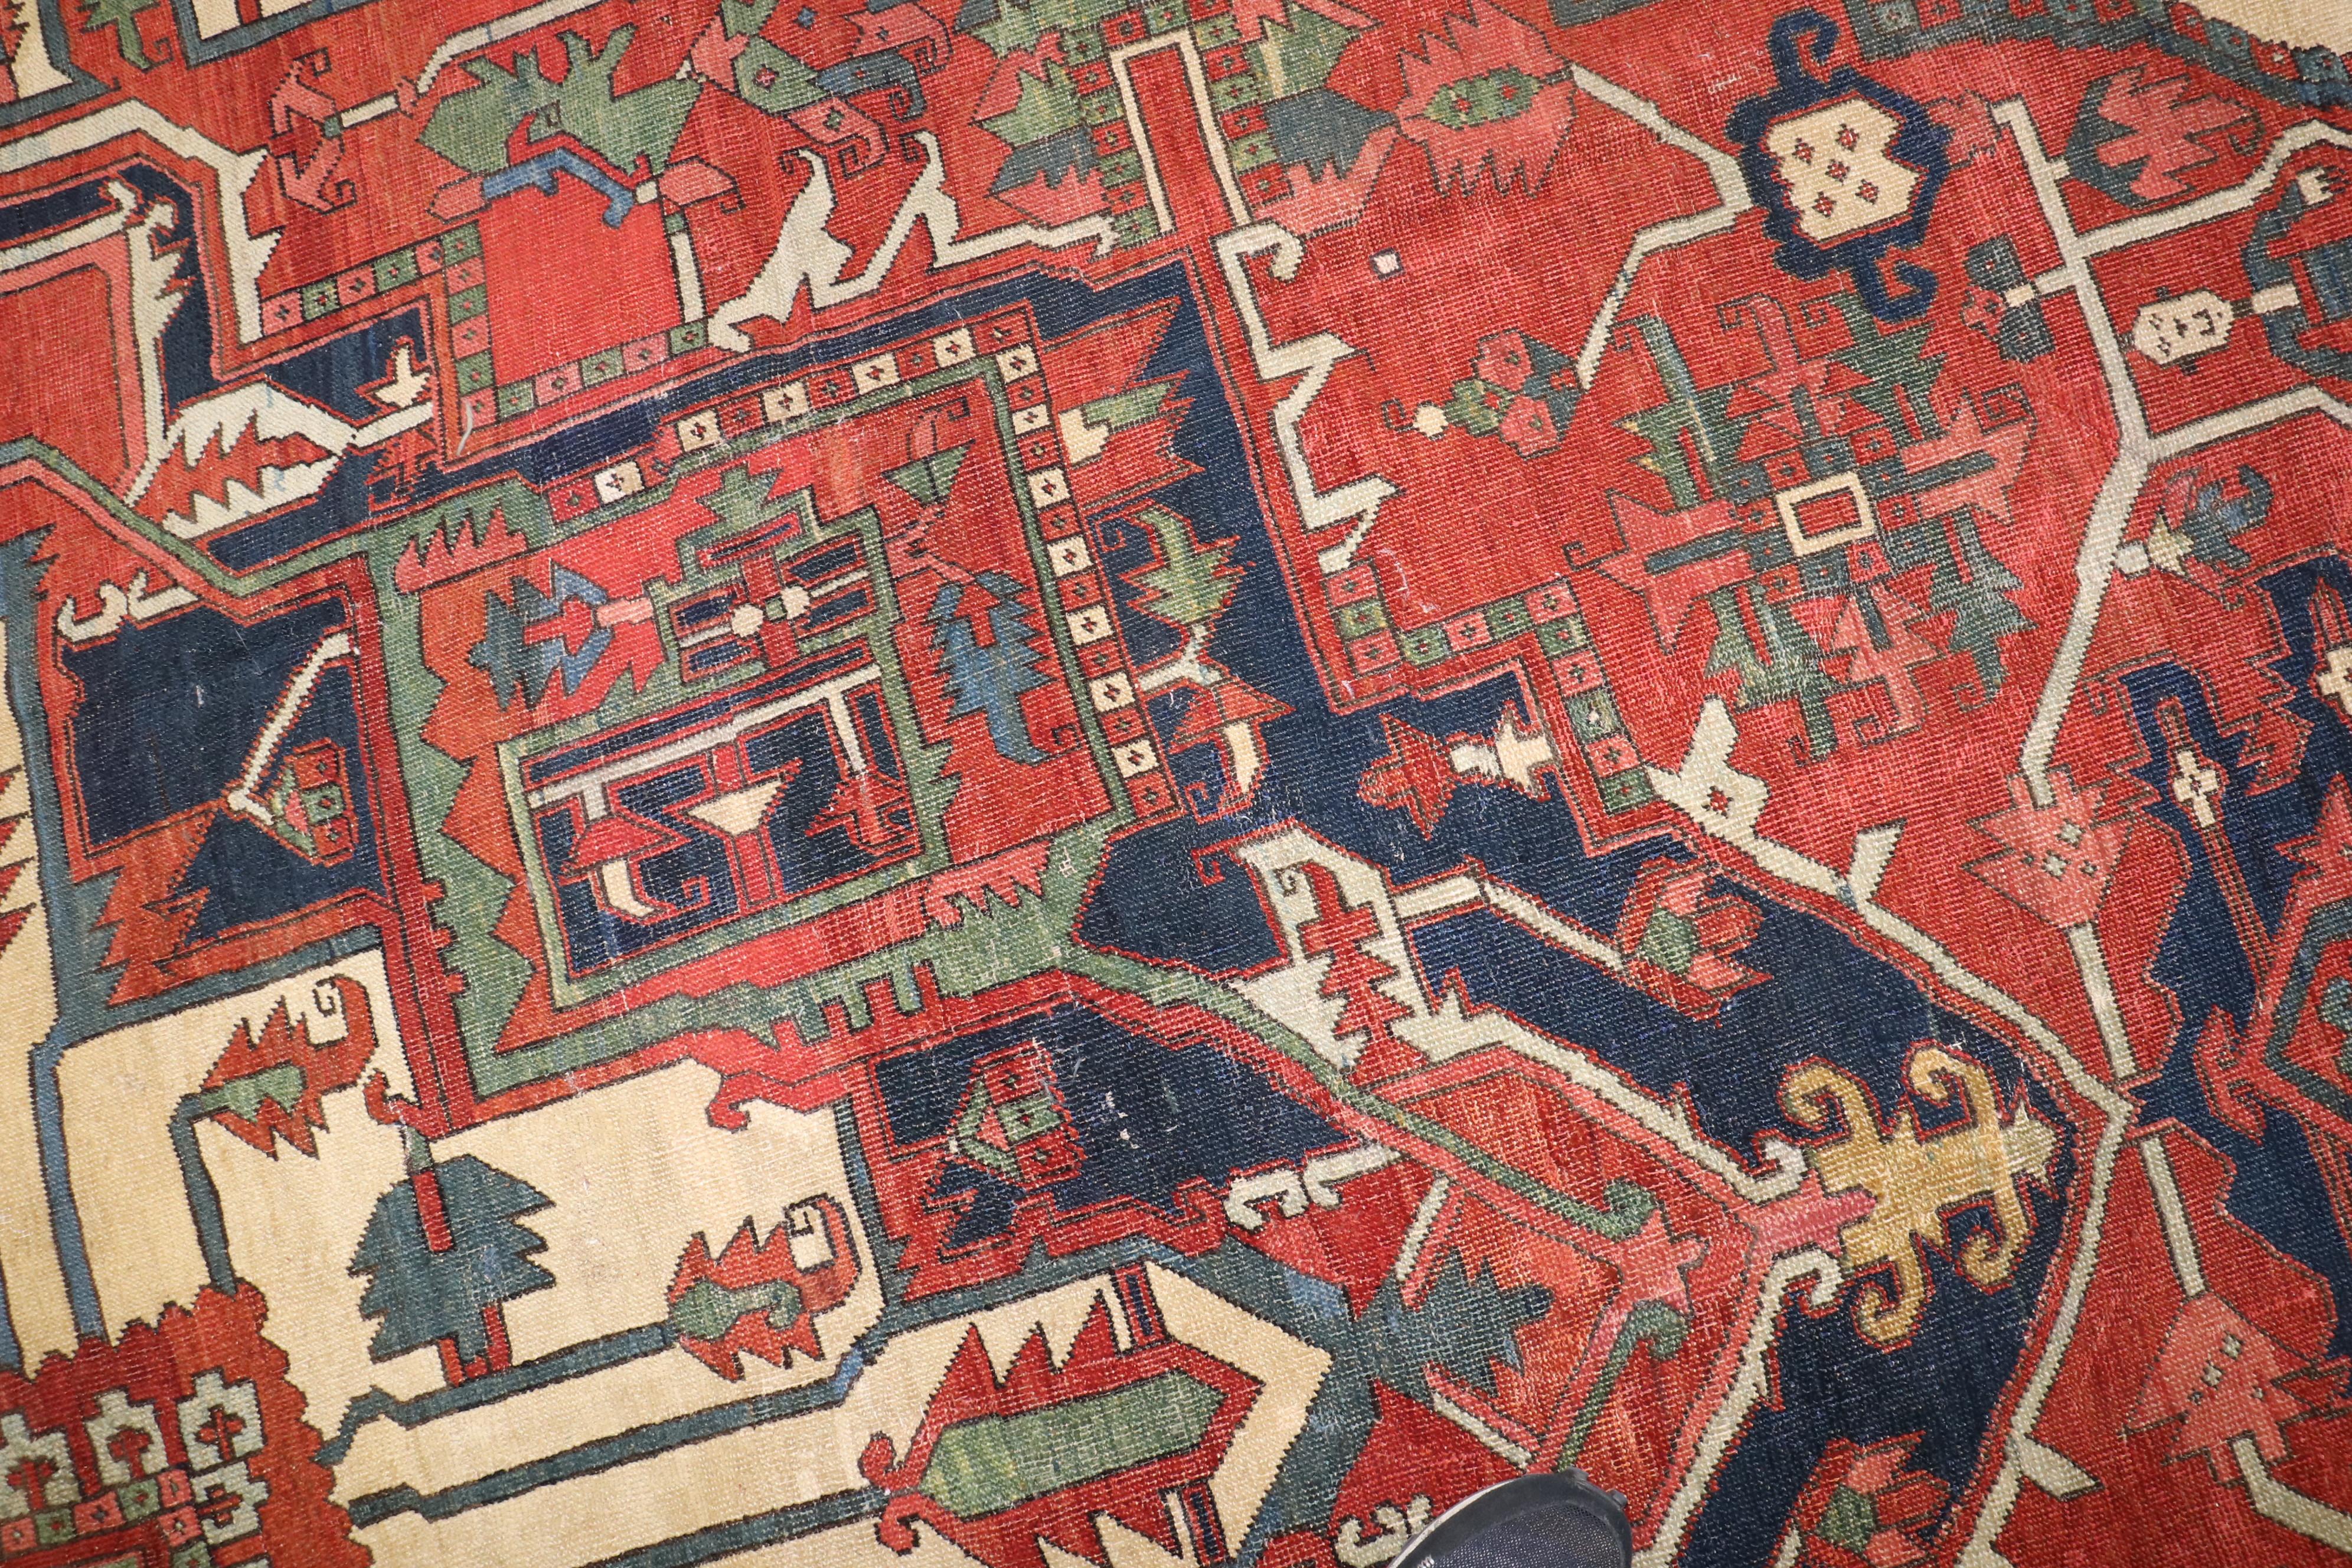 Zabihi Collection Pictorial Animal Figure Antique Persian Serapi Carpet For Sale 5